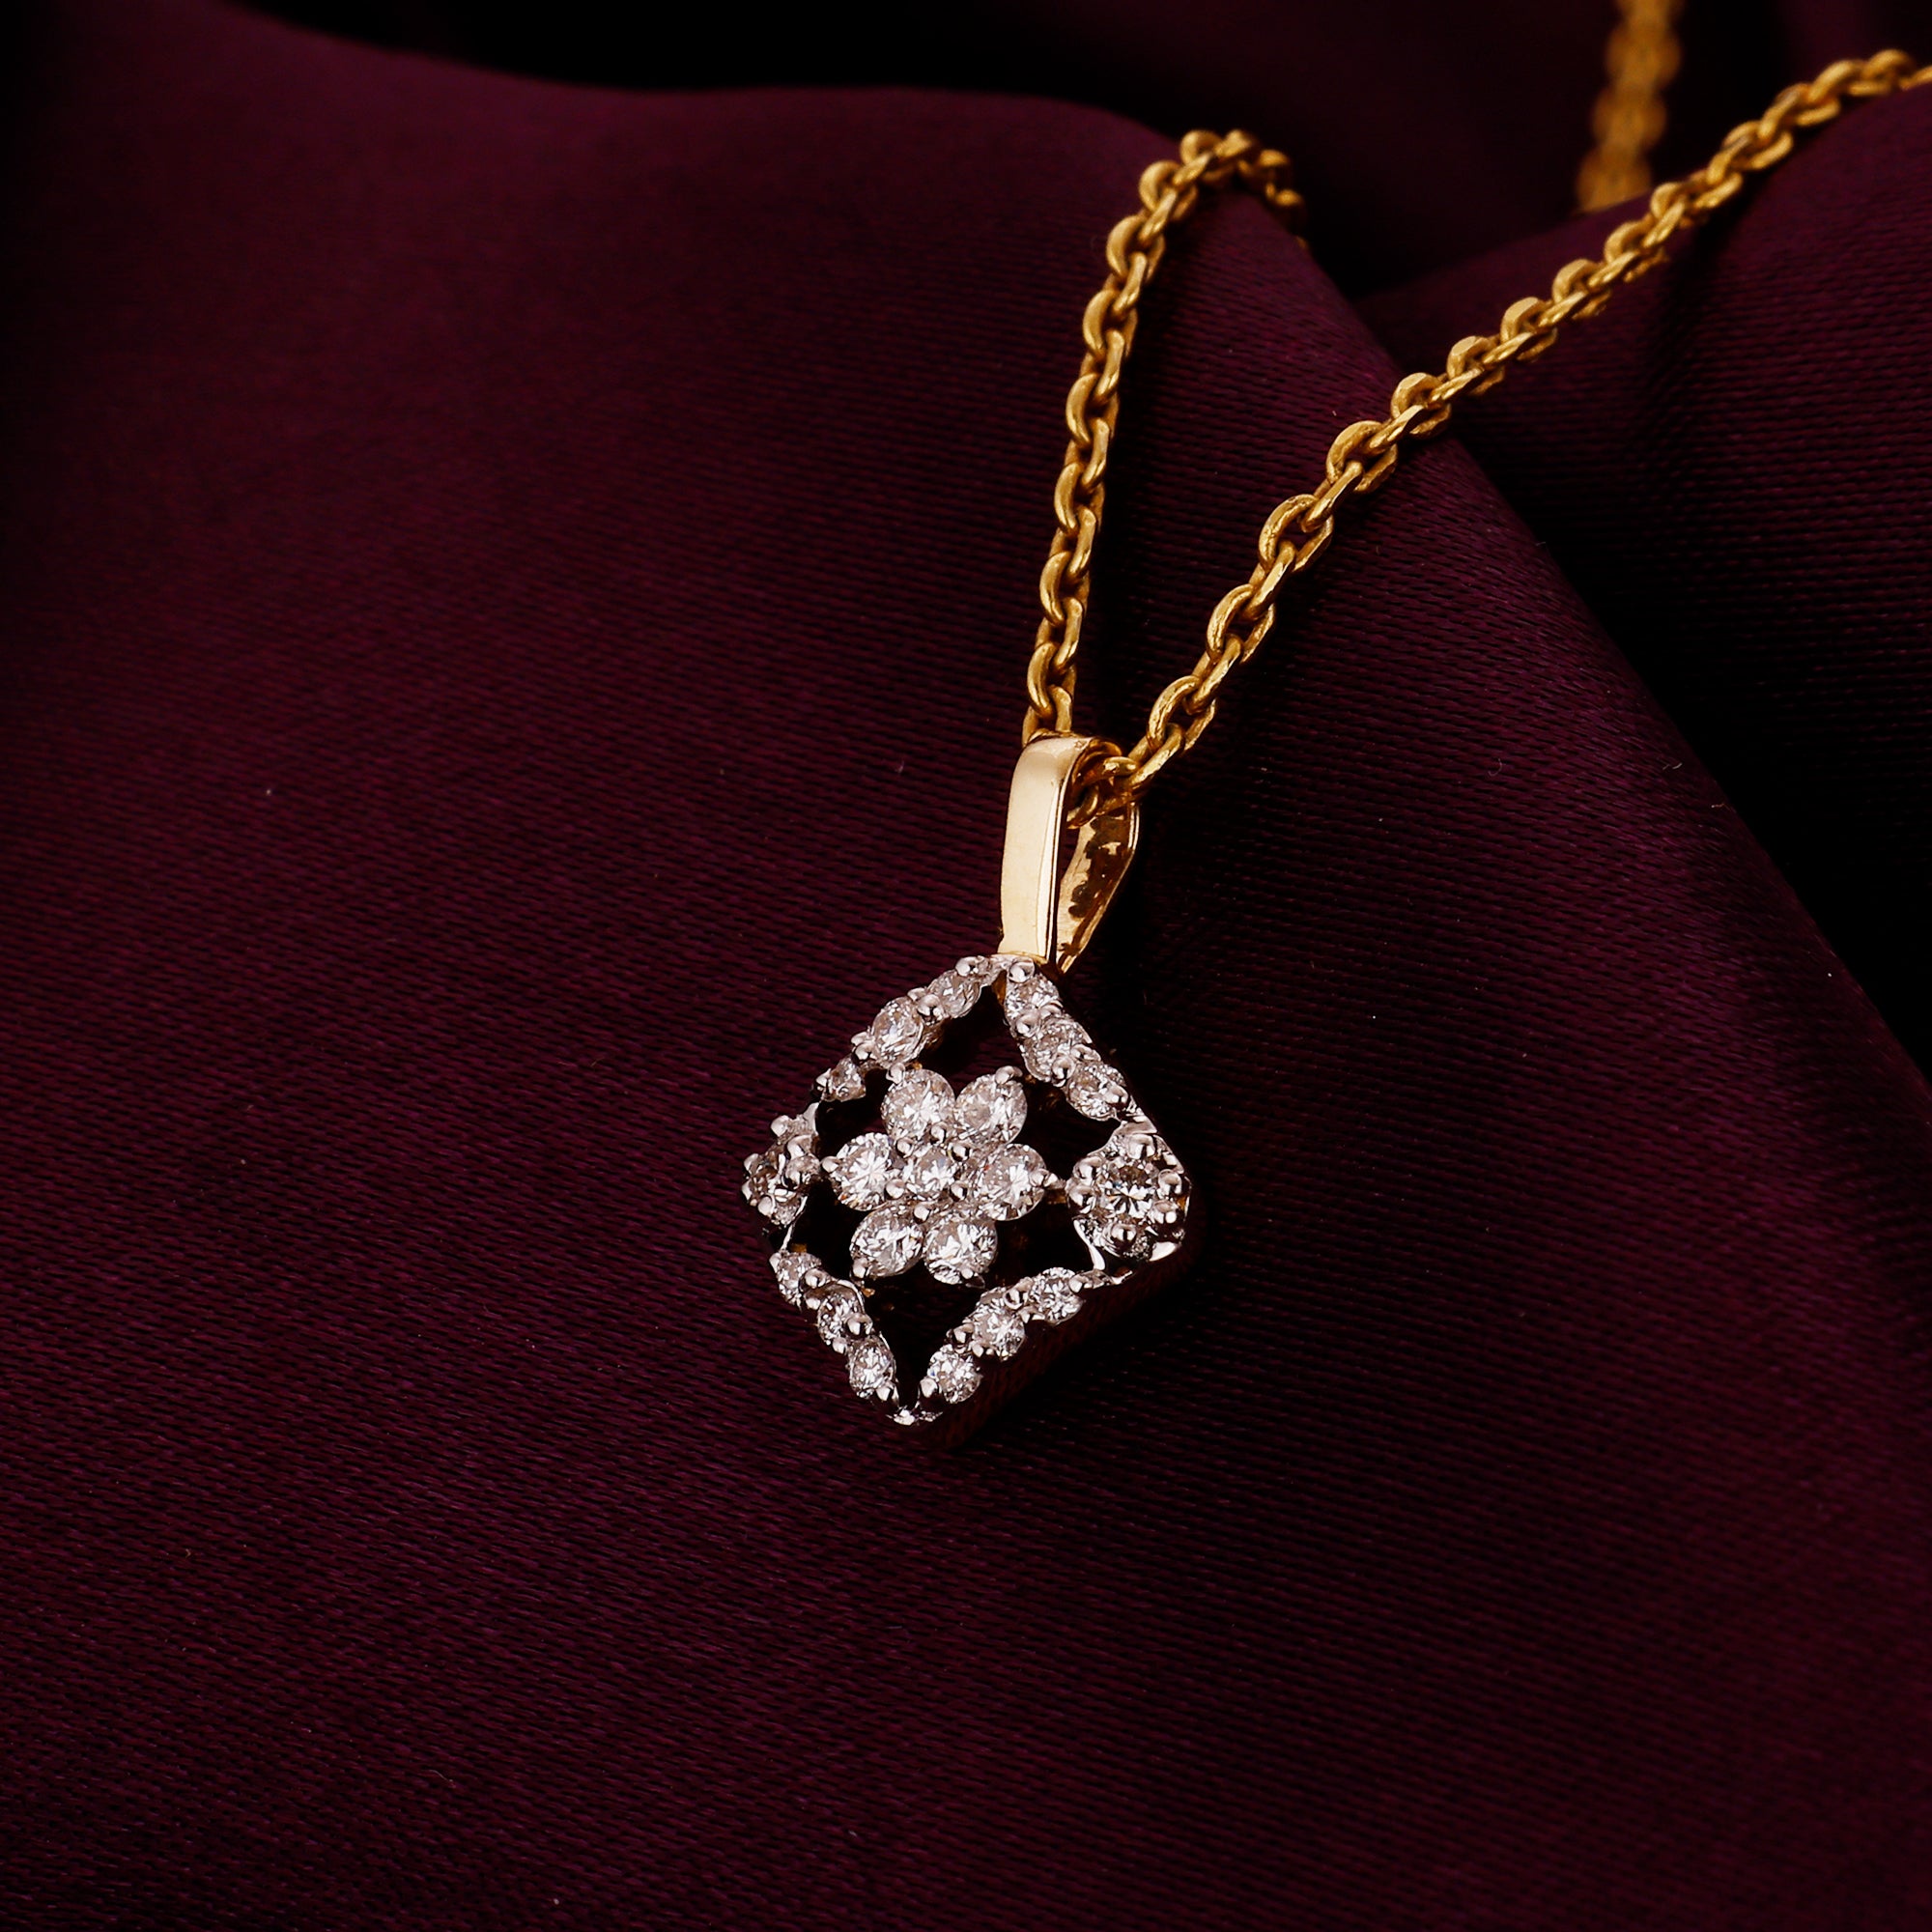 5-stone diamond bar necklace | Bar necklace, Diamond bar necklace, Necklace